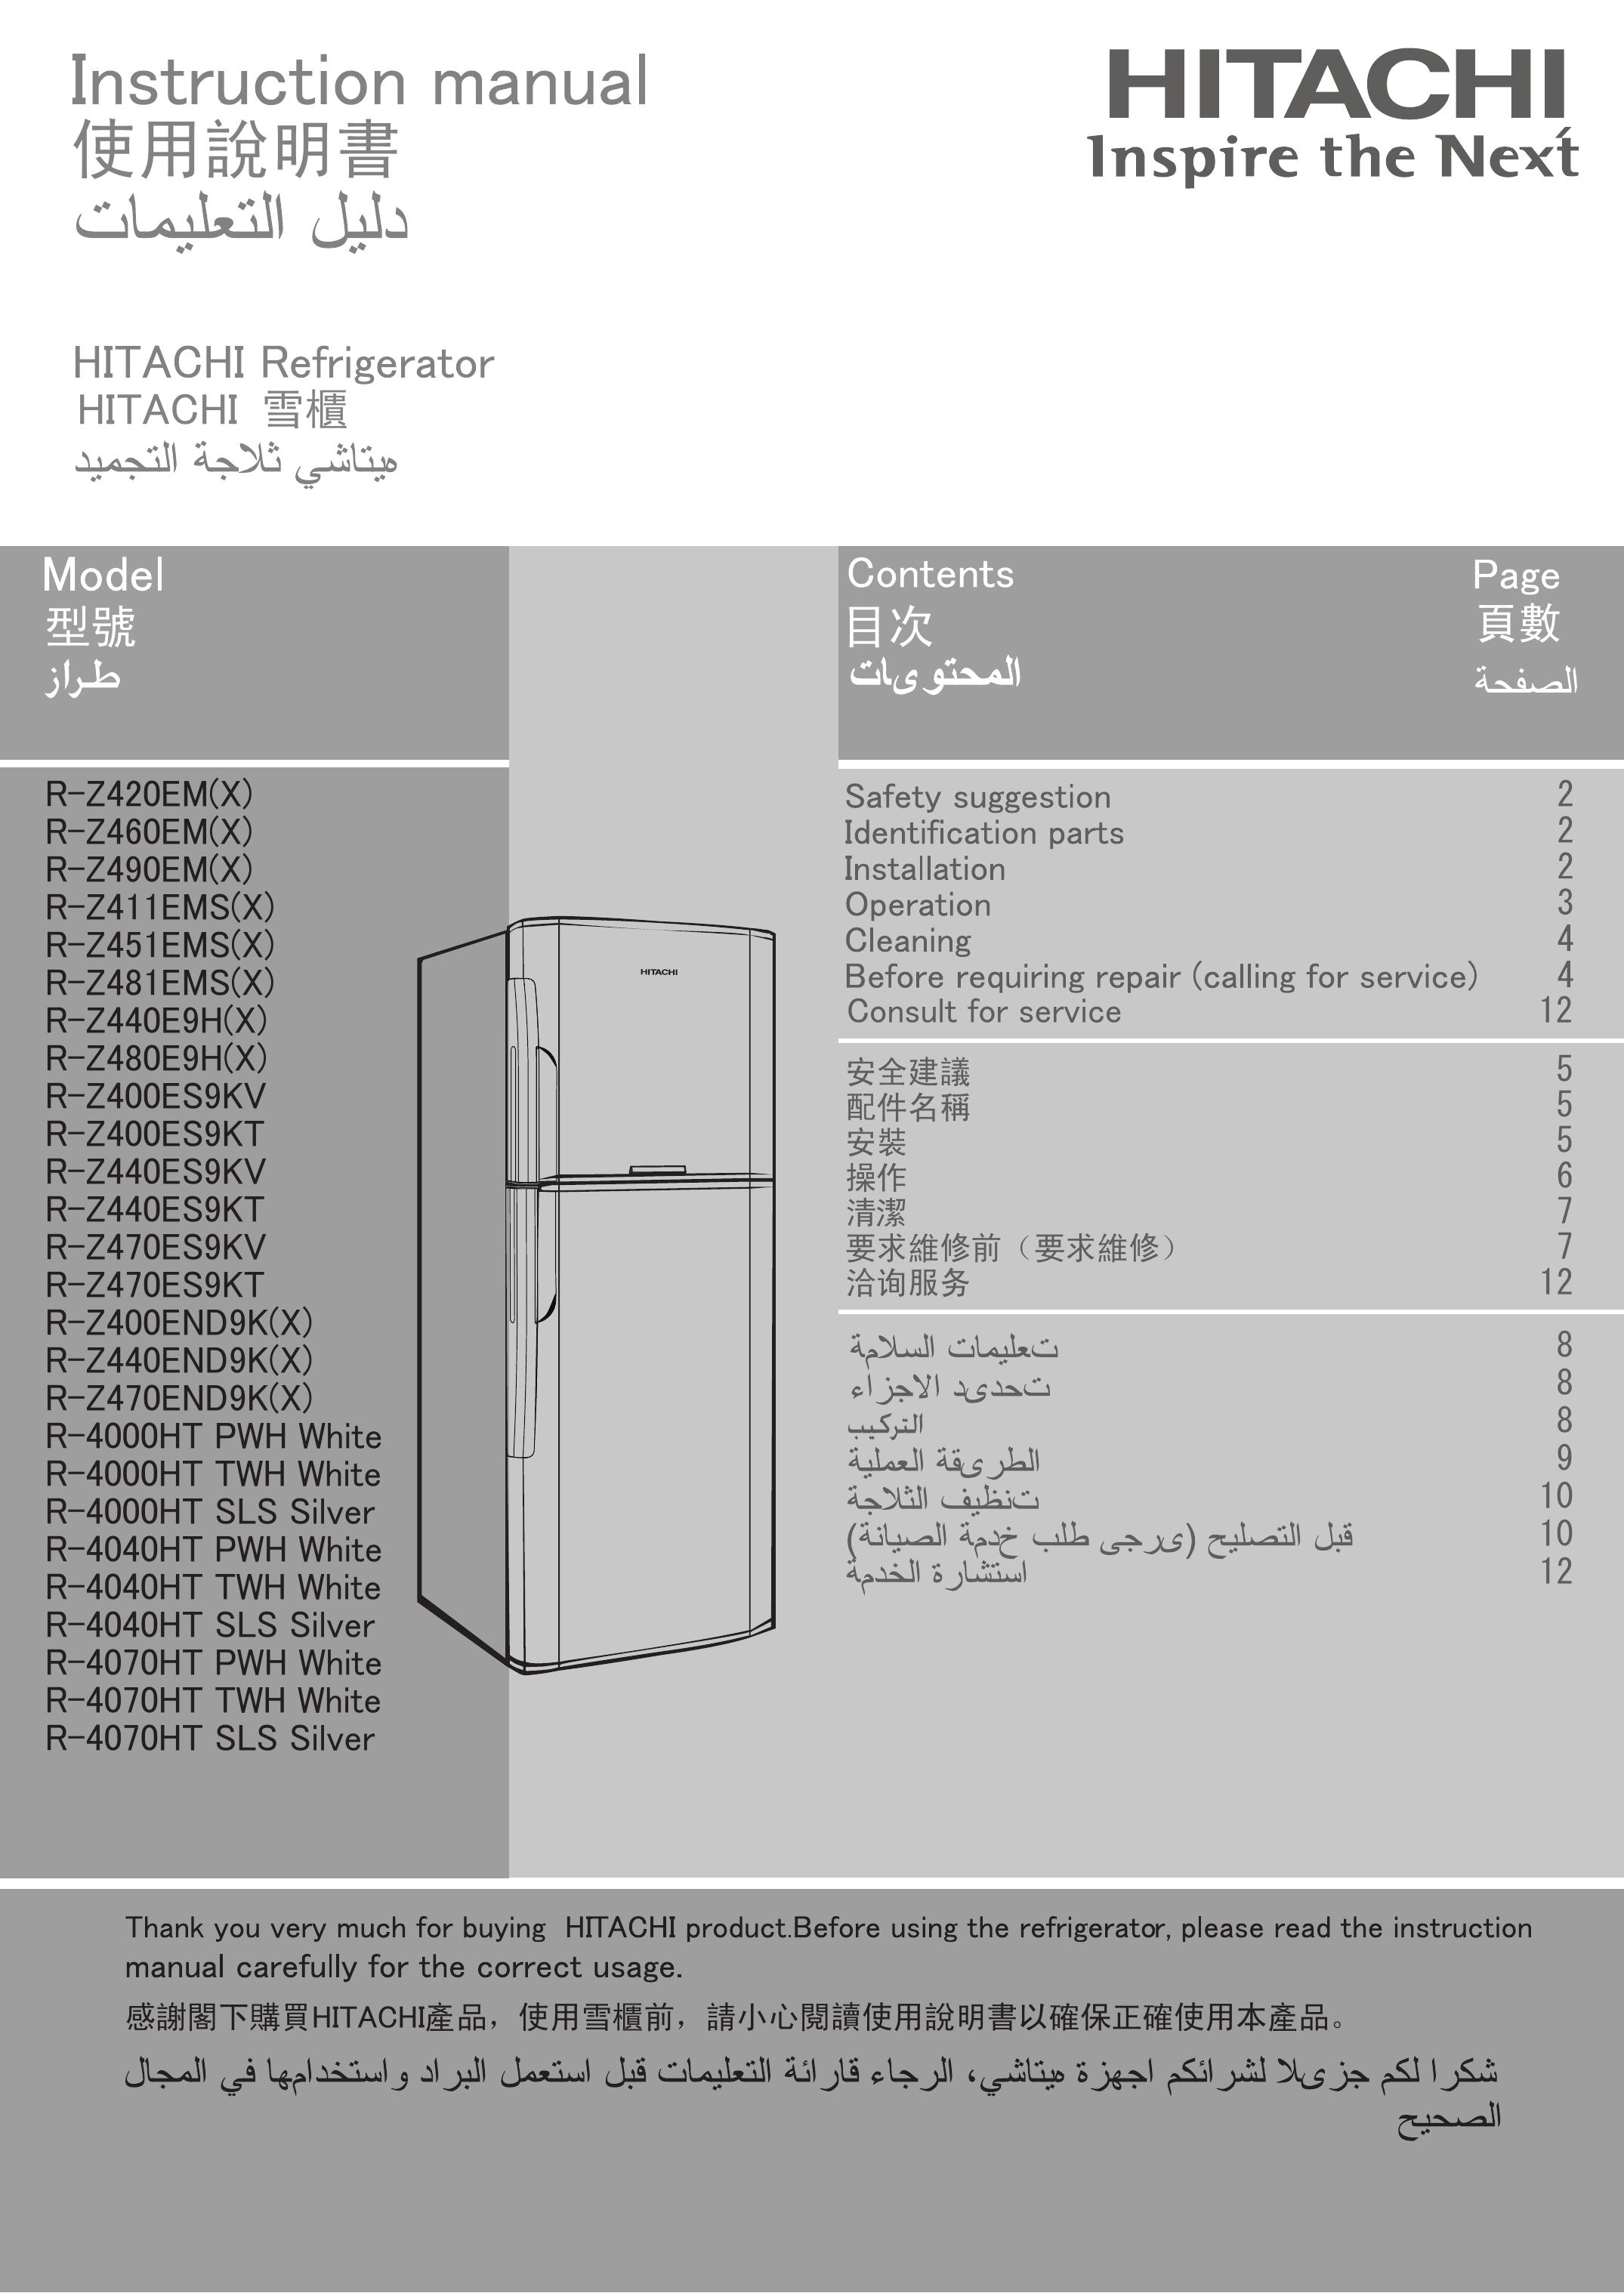 Hitachi R-Z440END9K(X) Refrigerator User Manual